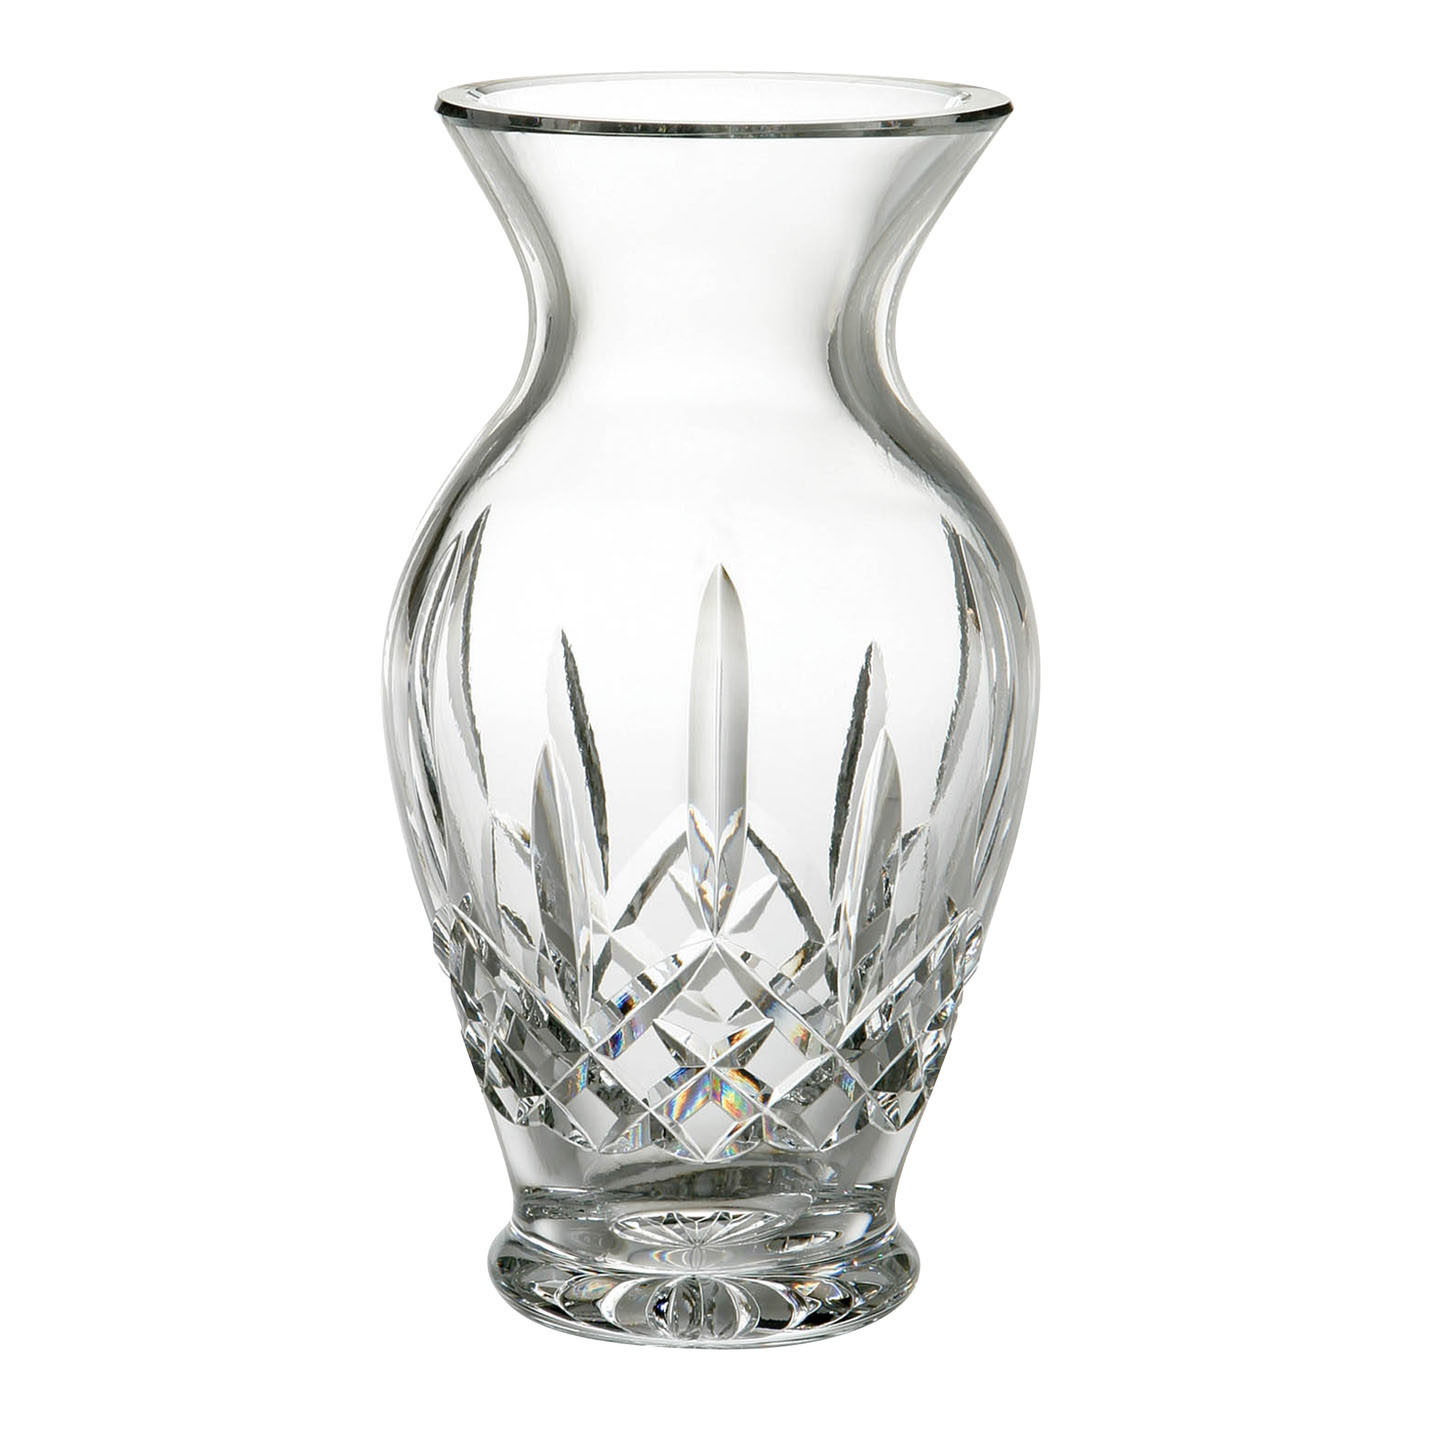 waterford giftology sugar bud vase of waterford lismore pilsner glass set of 2 waterforda crystal for https www waterford co uk lismore pilsner glass set of 2